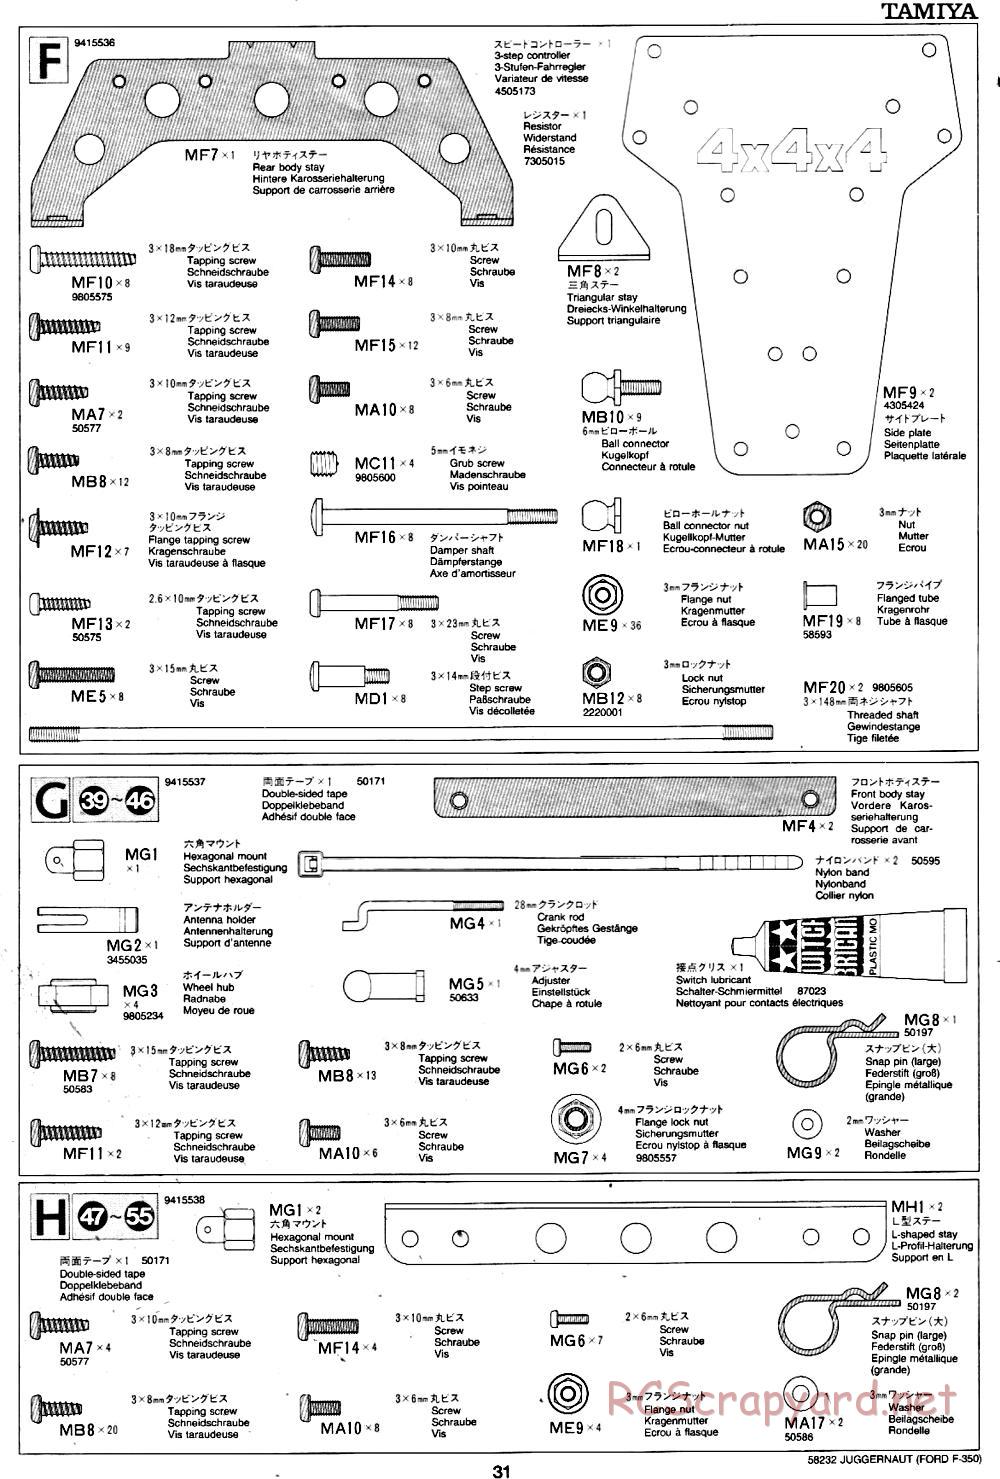 Tamiya - Juggernaut Chassis - Manual - Page 31